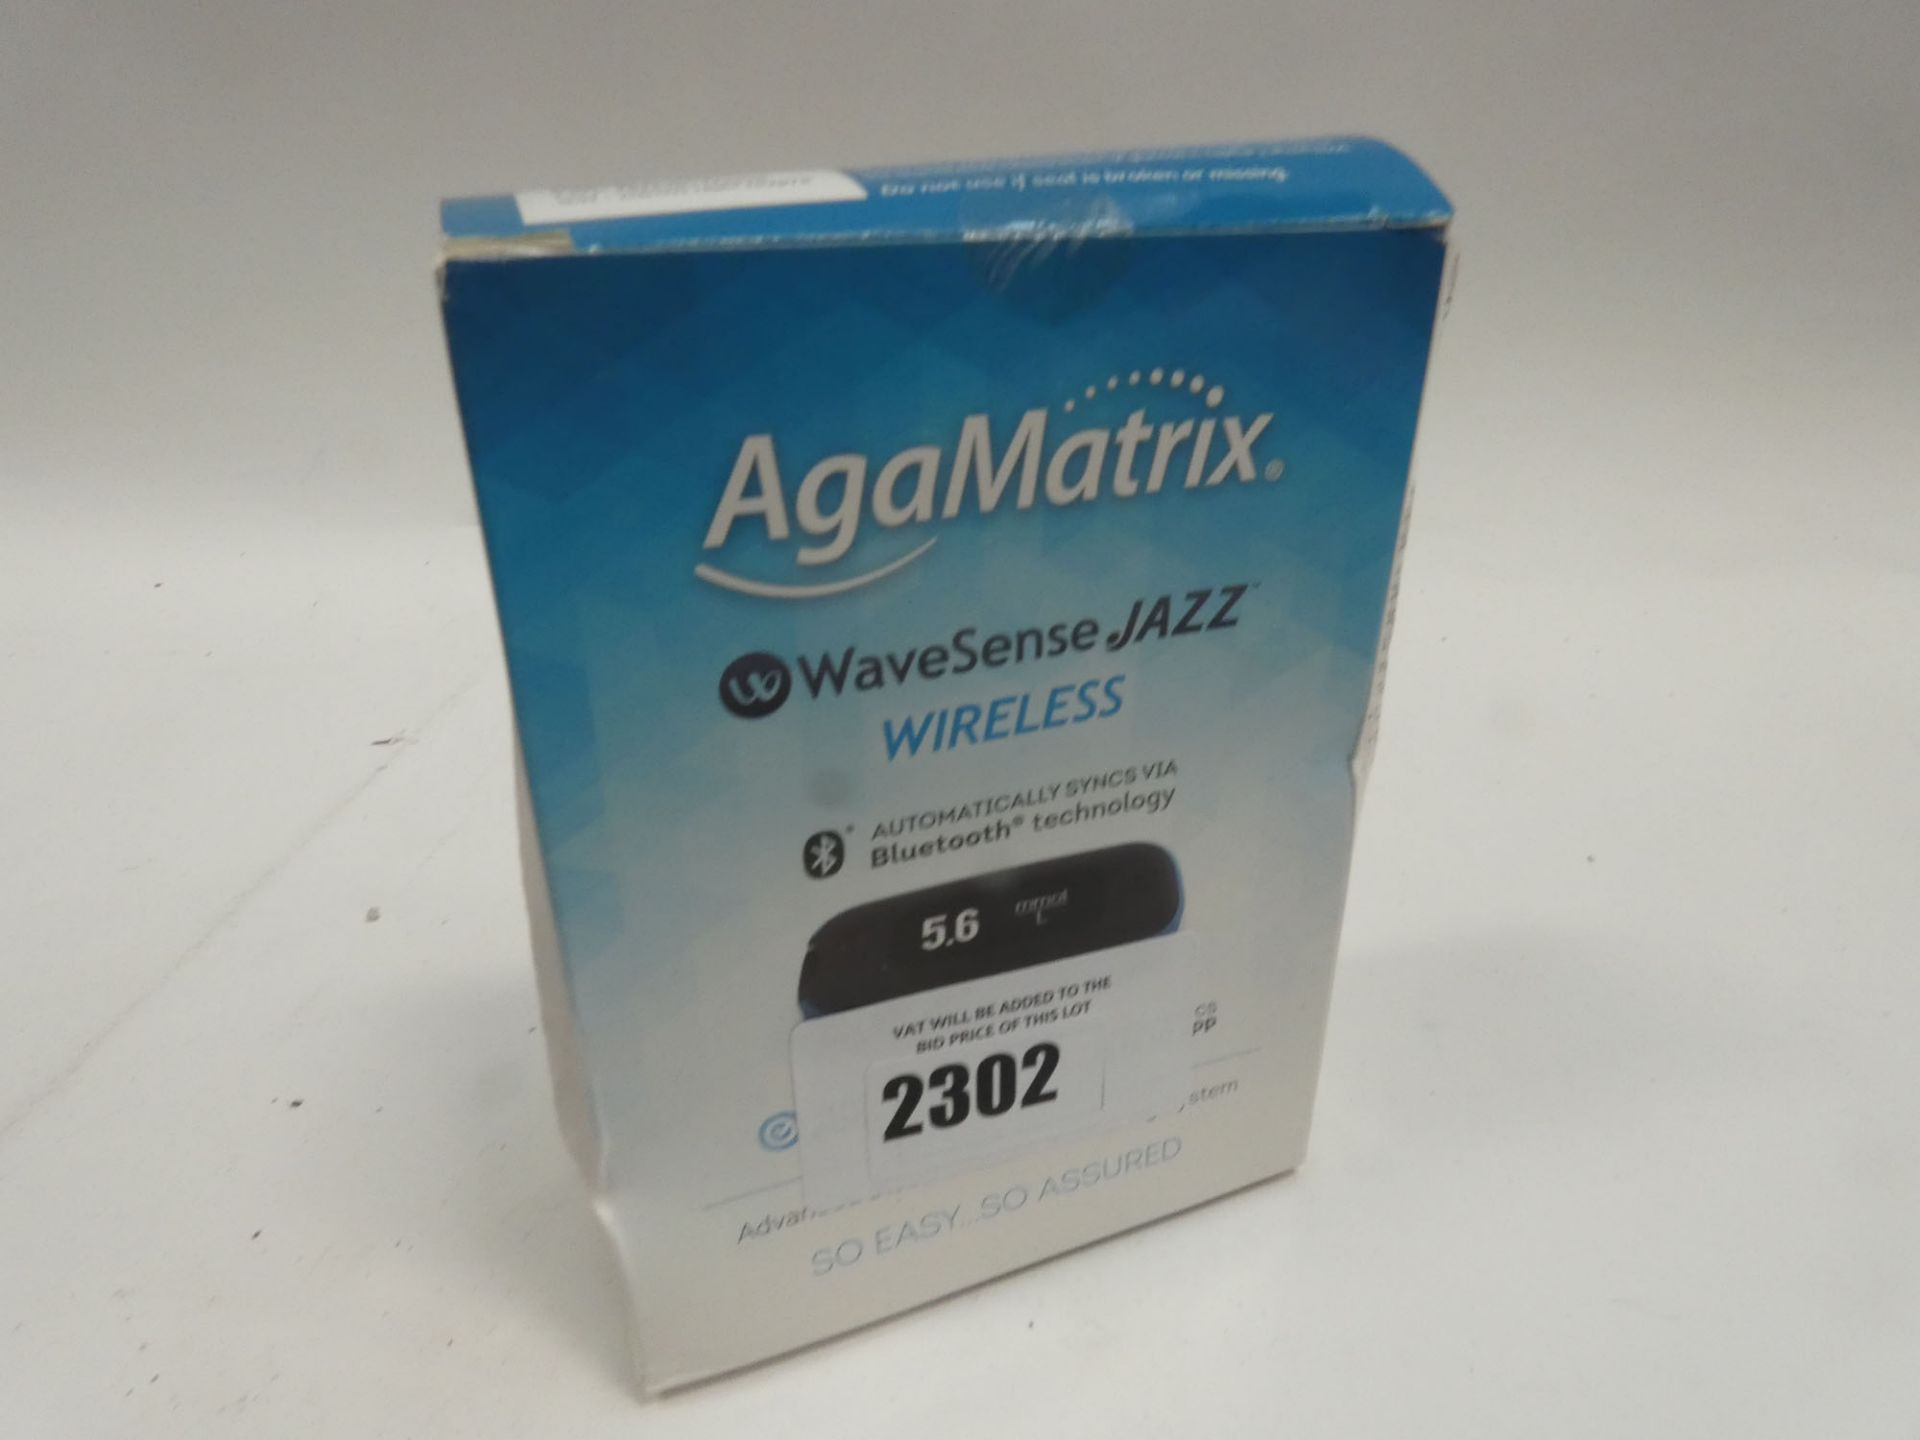 AgaMatrix WaveSense Jazz wireless glucose monitor